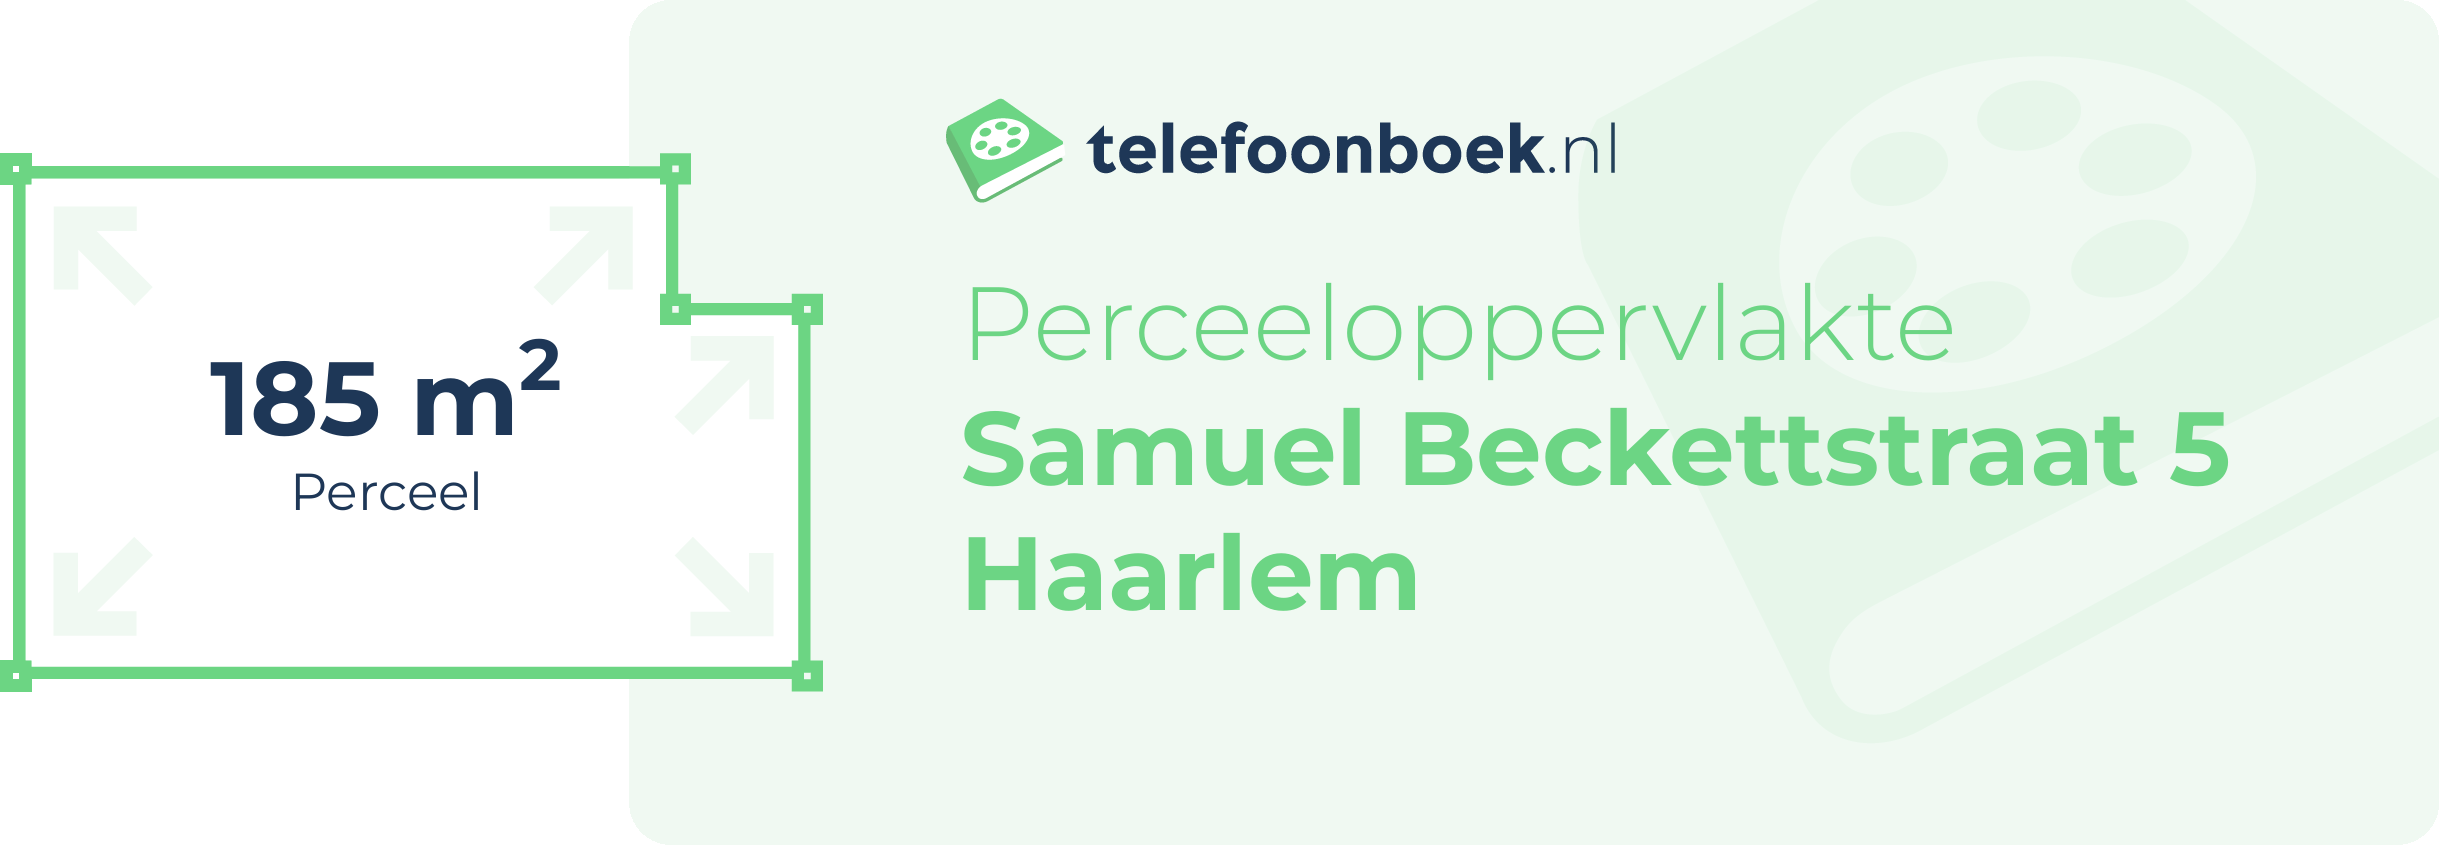 Perceeloppervlakte Samuel Beckettstraat 5 Haarlem